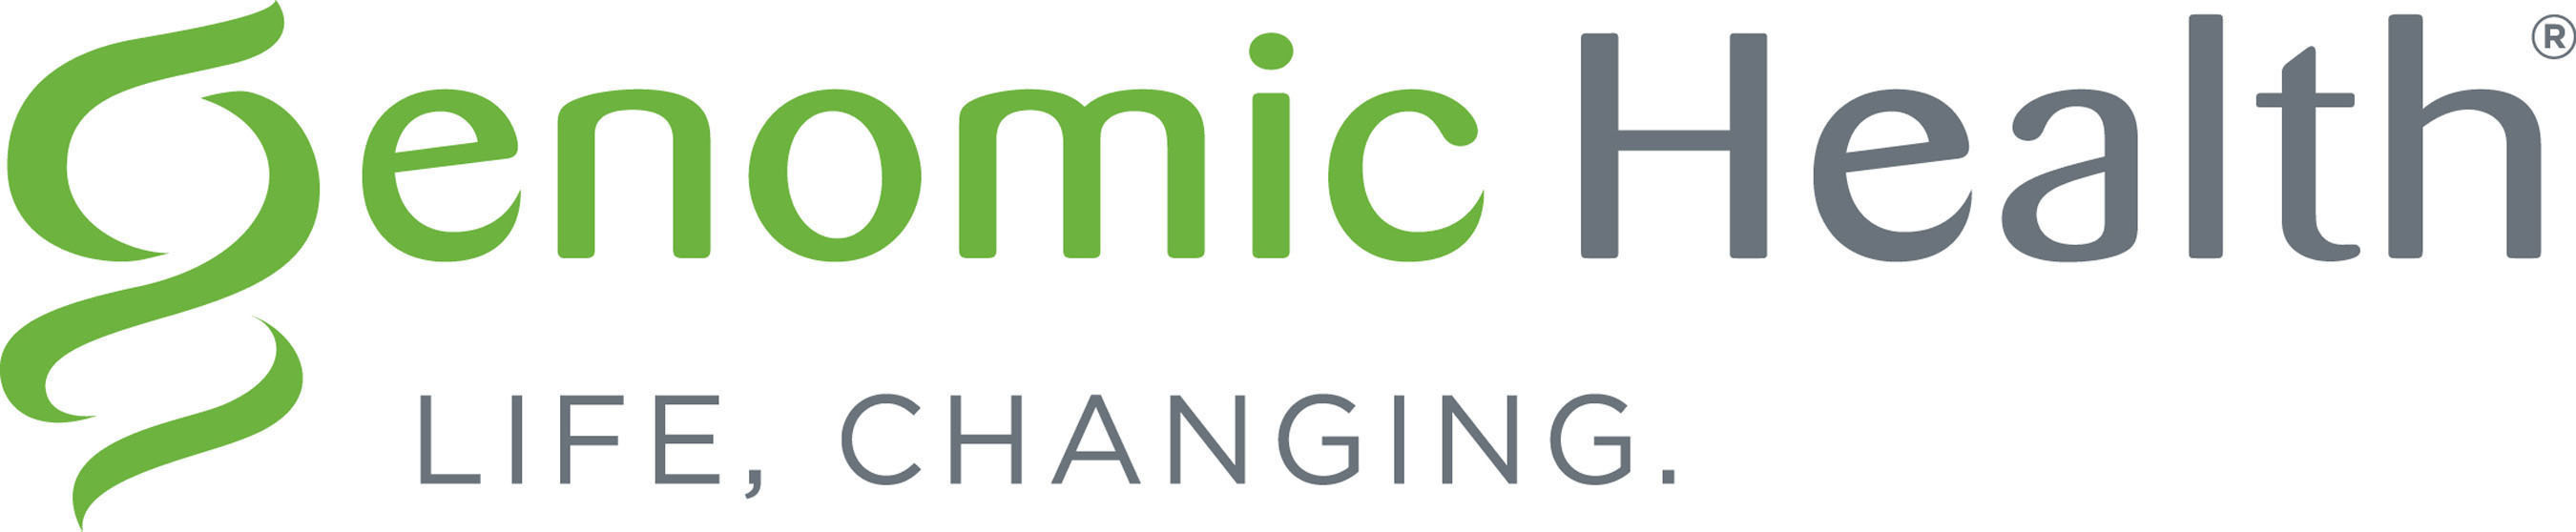 Genomic Health, Inc. logo. (PRNewsFoto/Genomic Health, Inc.) (PRNewsFoto/)